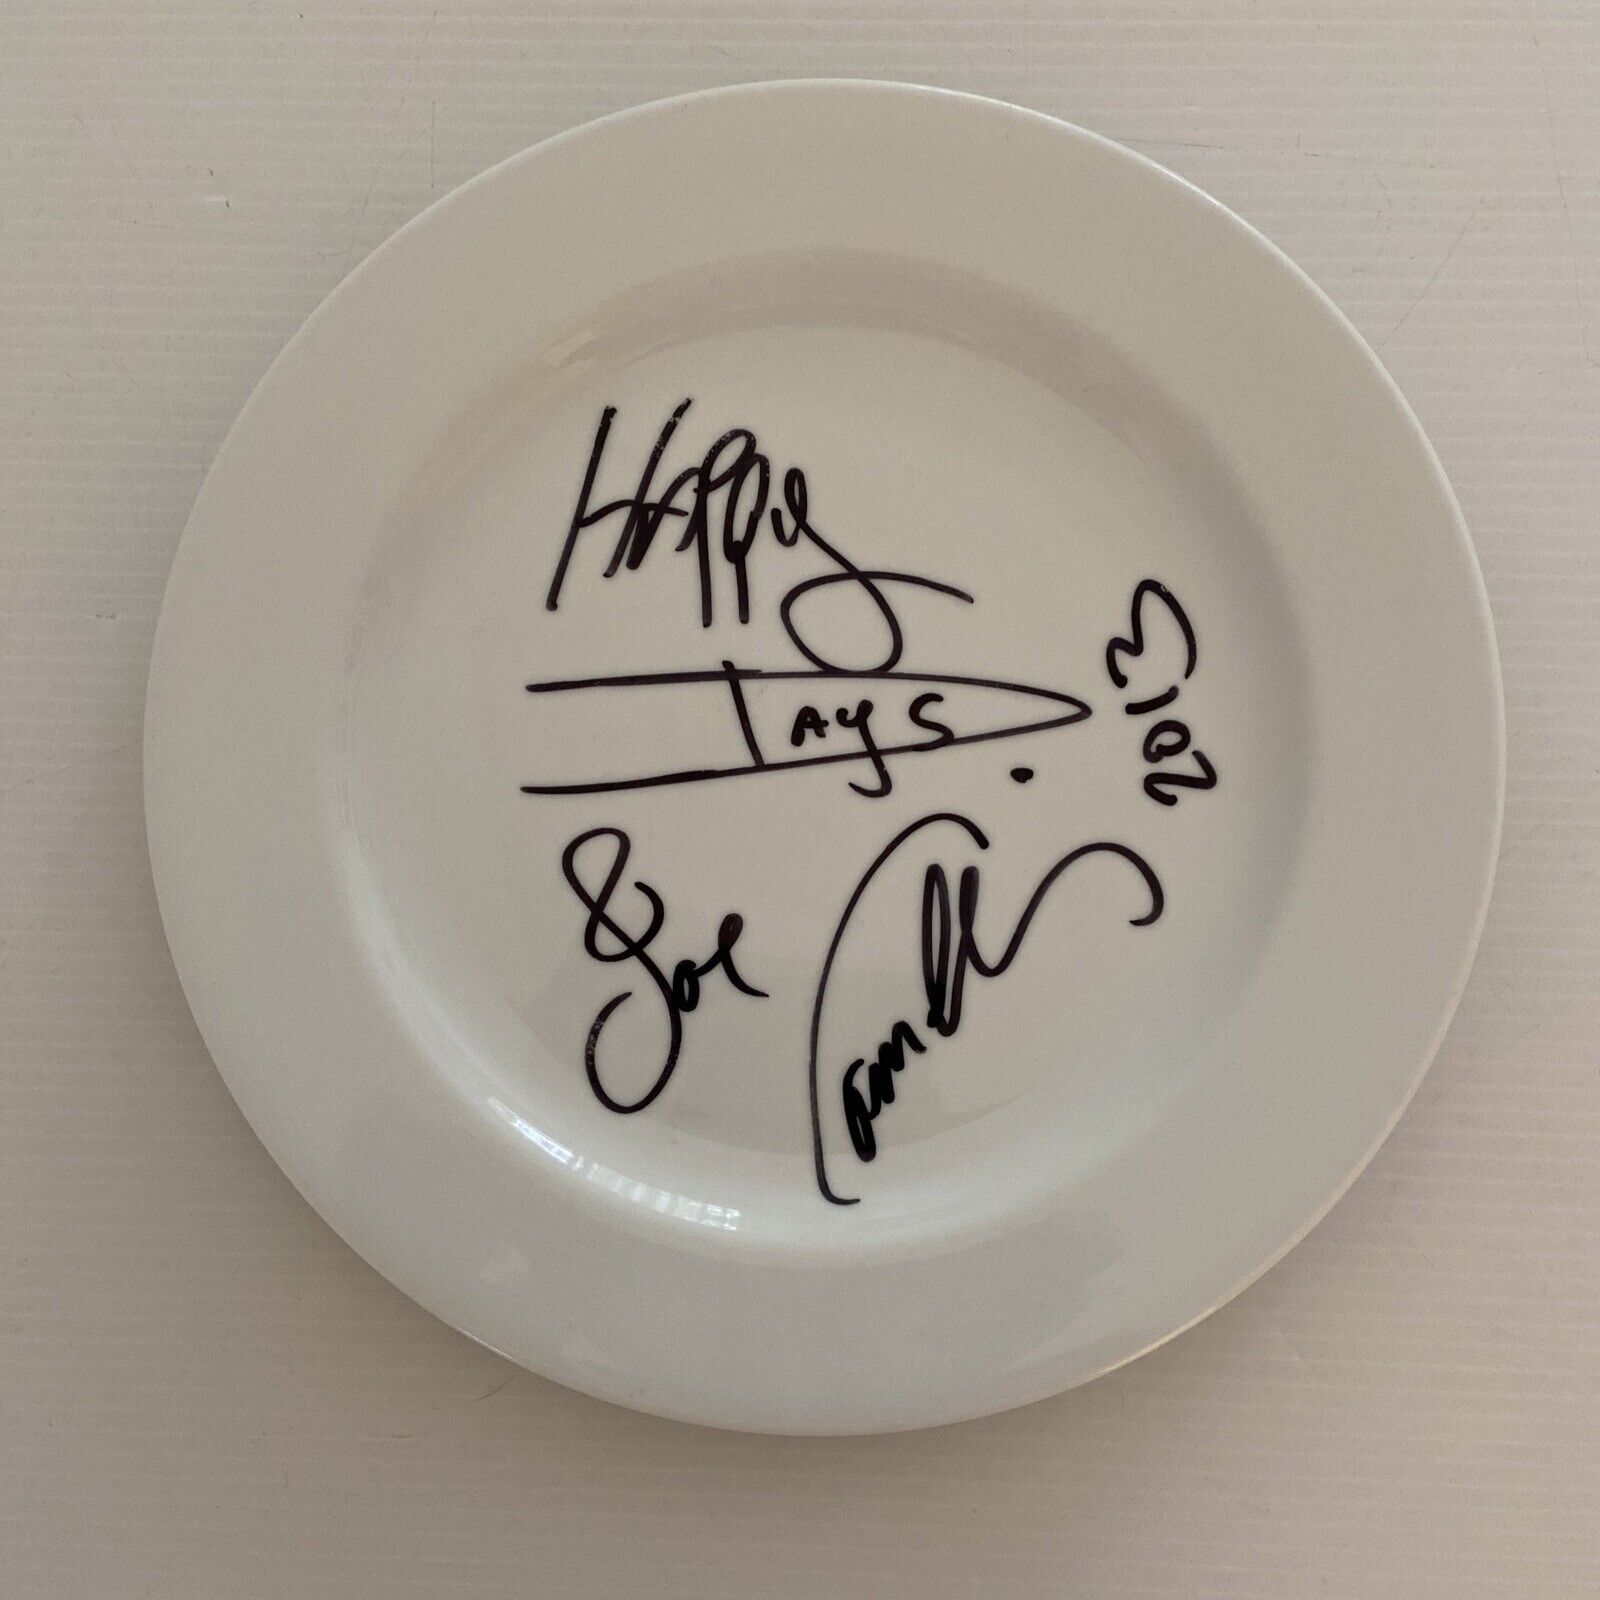 Royal Porcelain Plate Signed Happy Days Joe Camilleri 2013 Black Sorrows Music